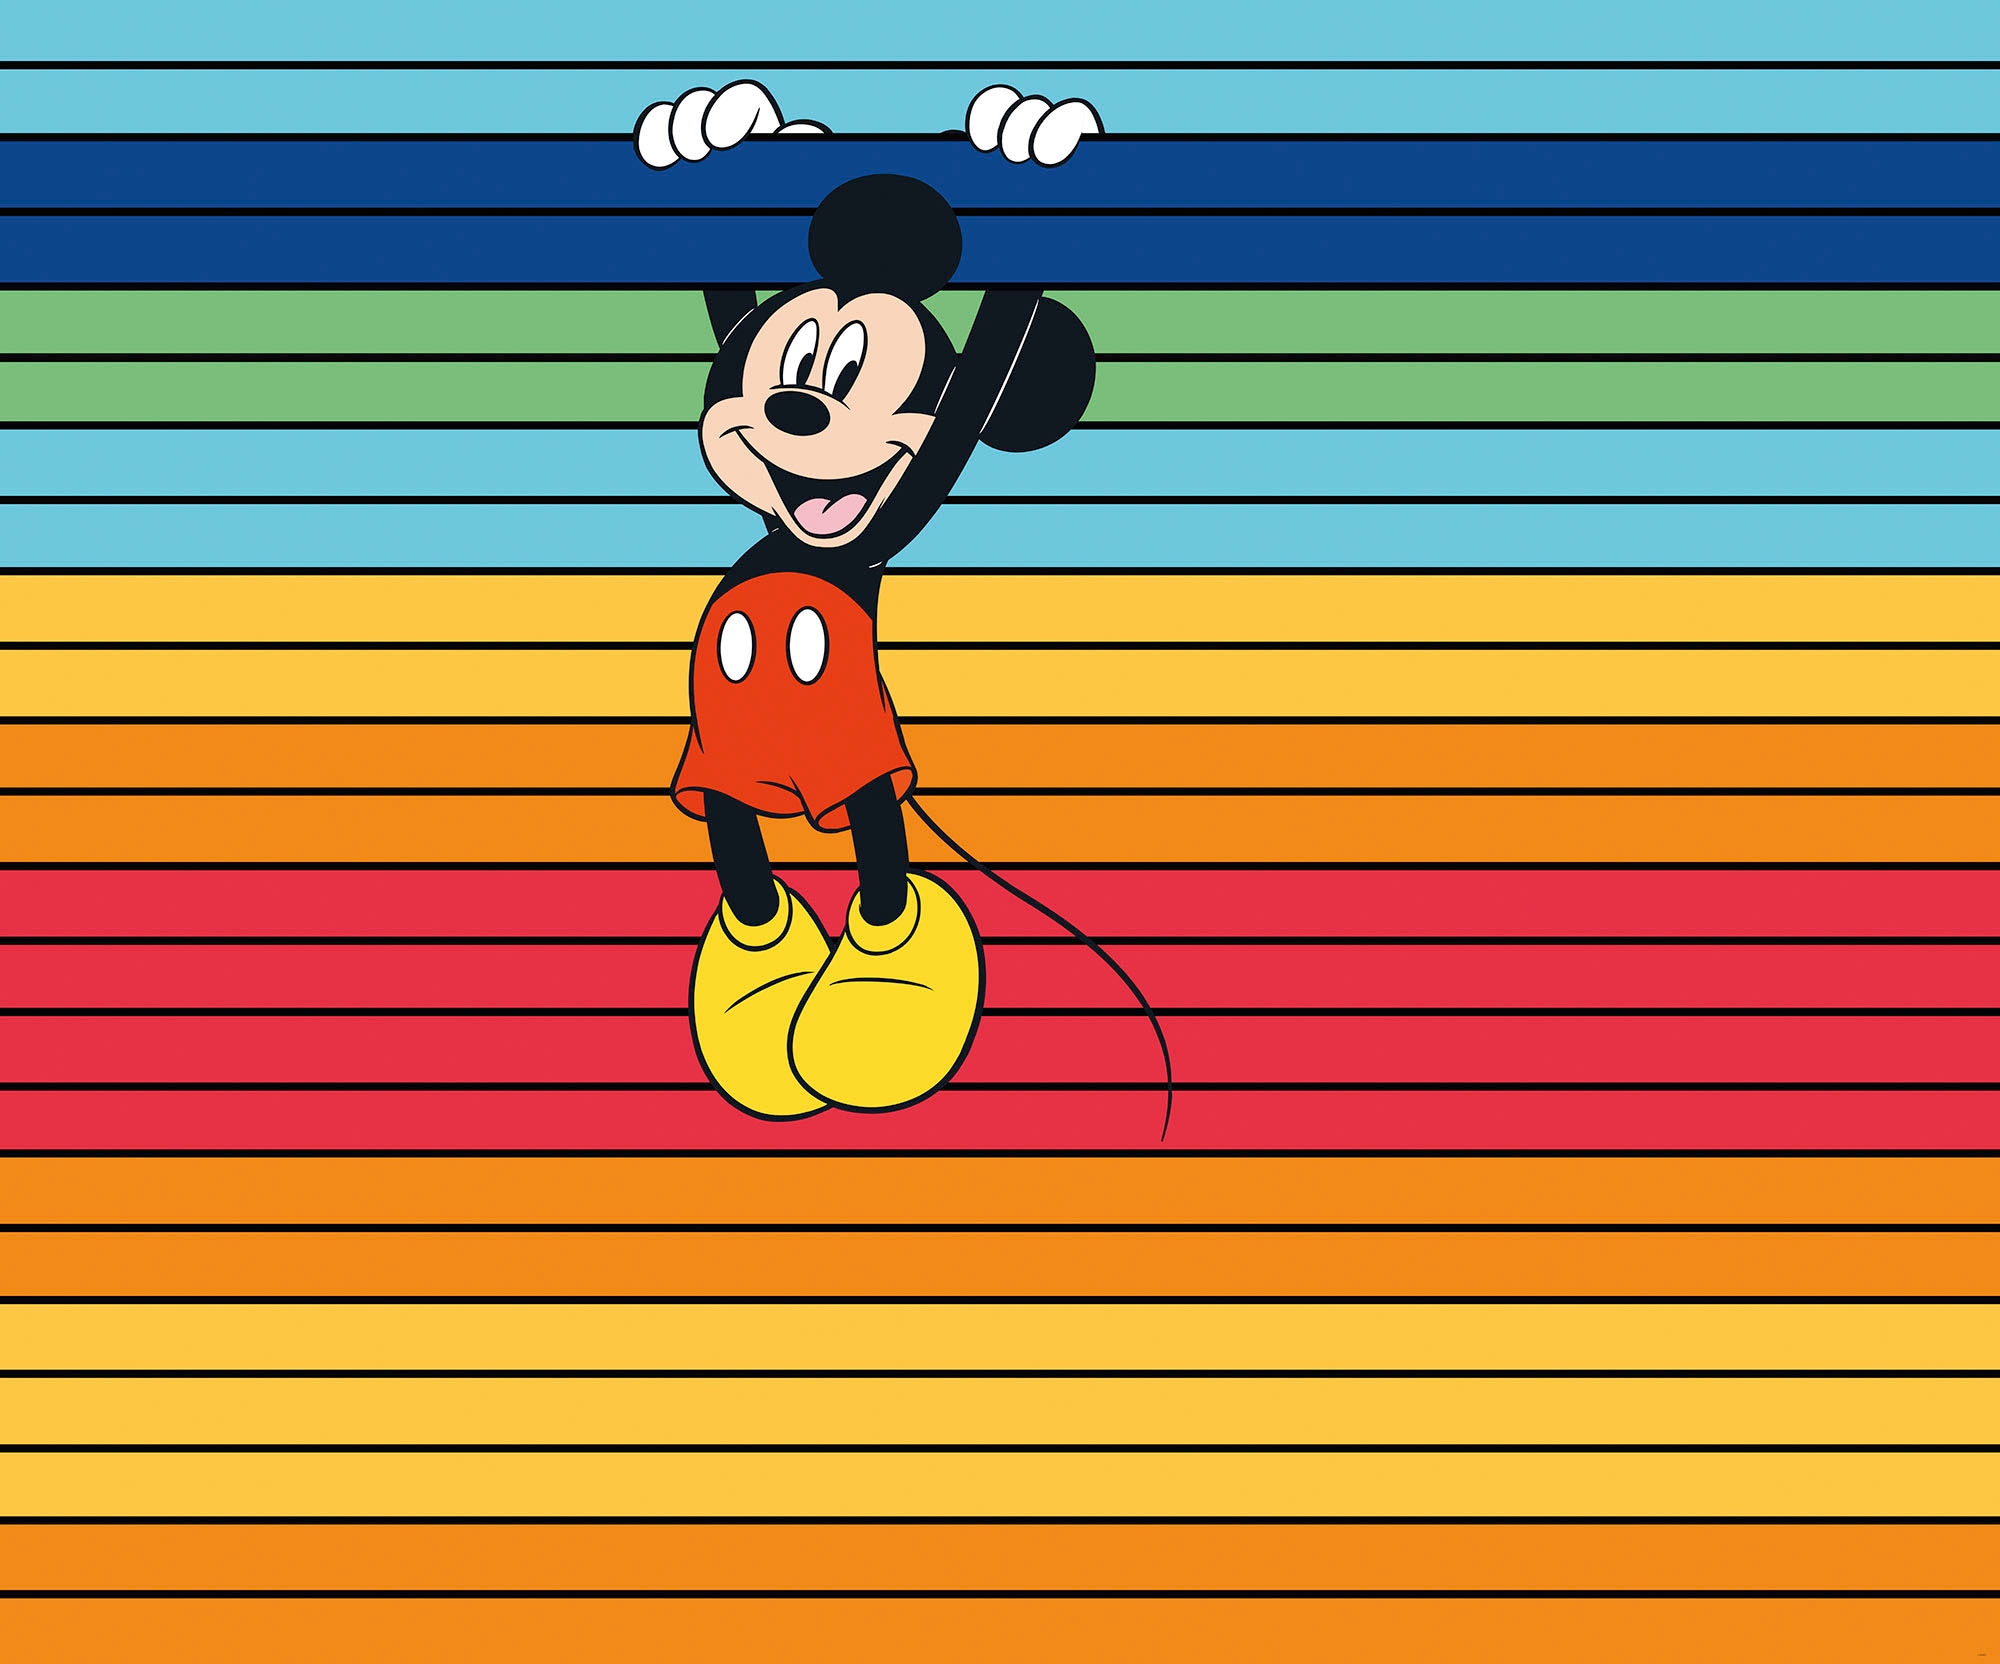 Komar Vliestapete »Mickey Magic Rainbow«, 300x250 cm (Breite x Höhe)